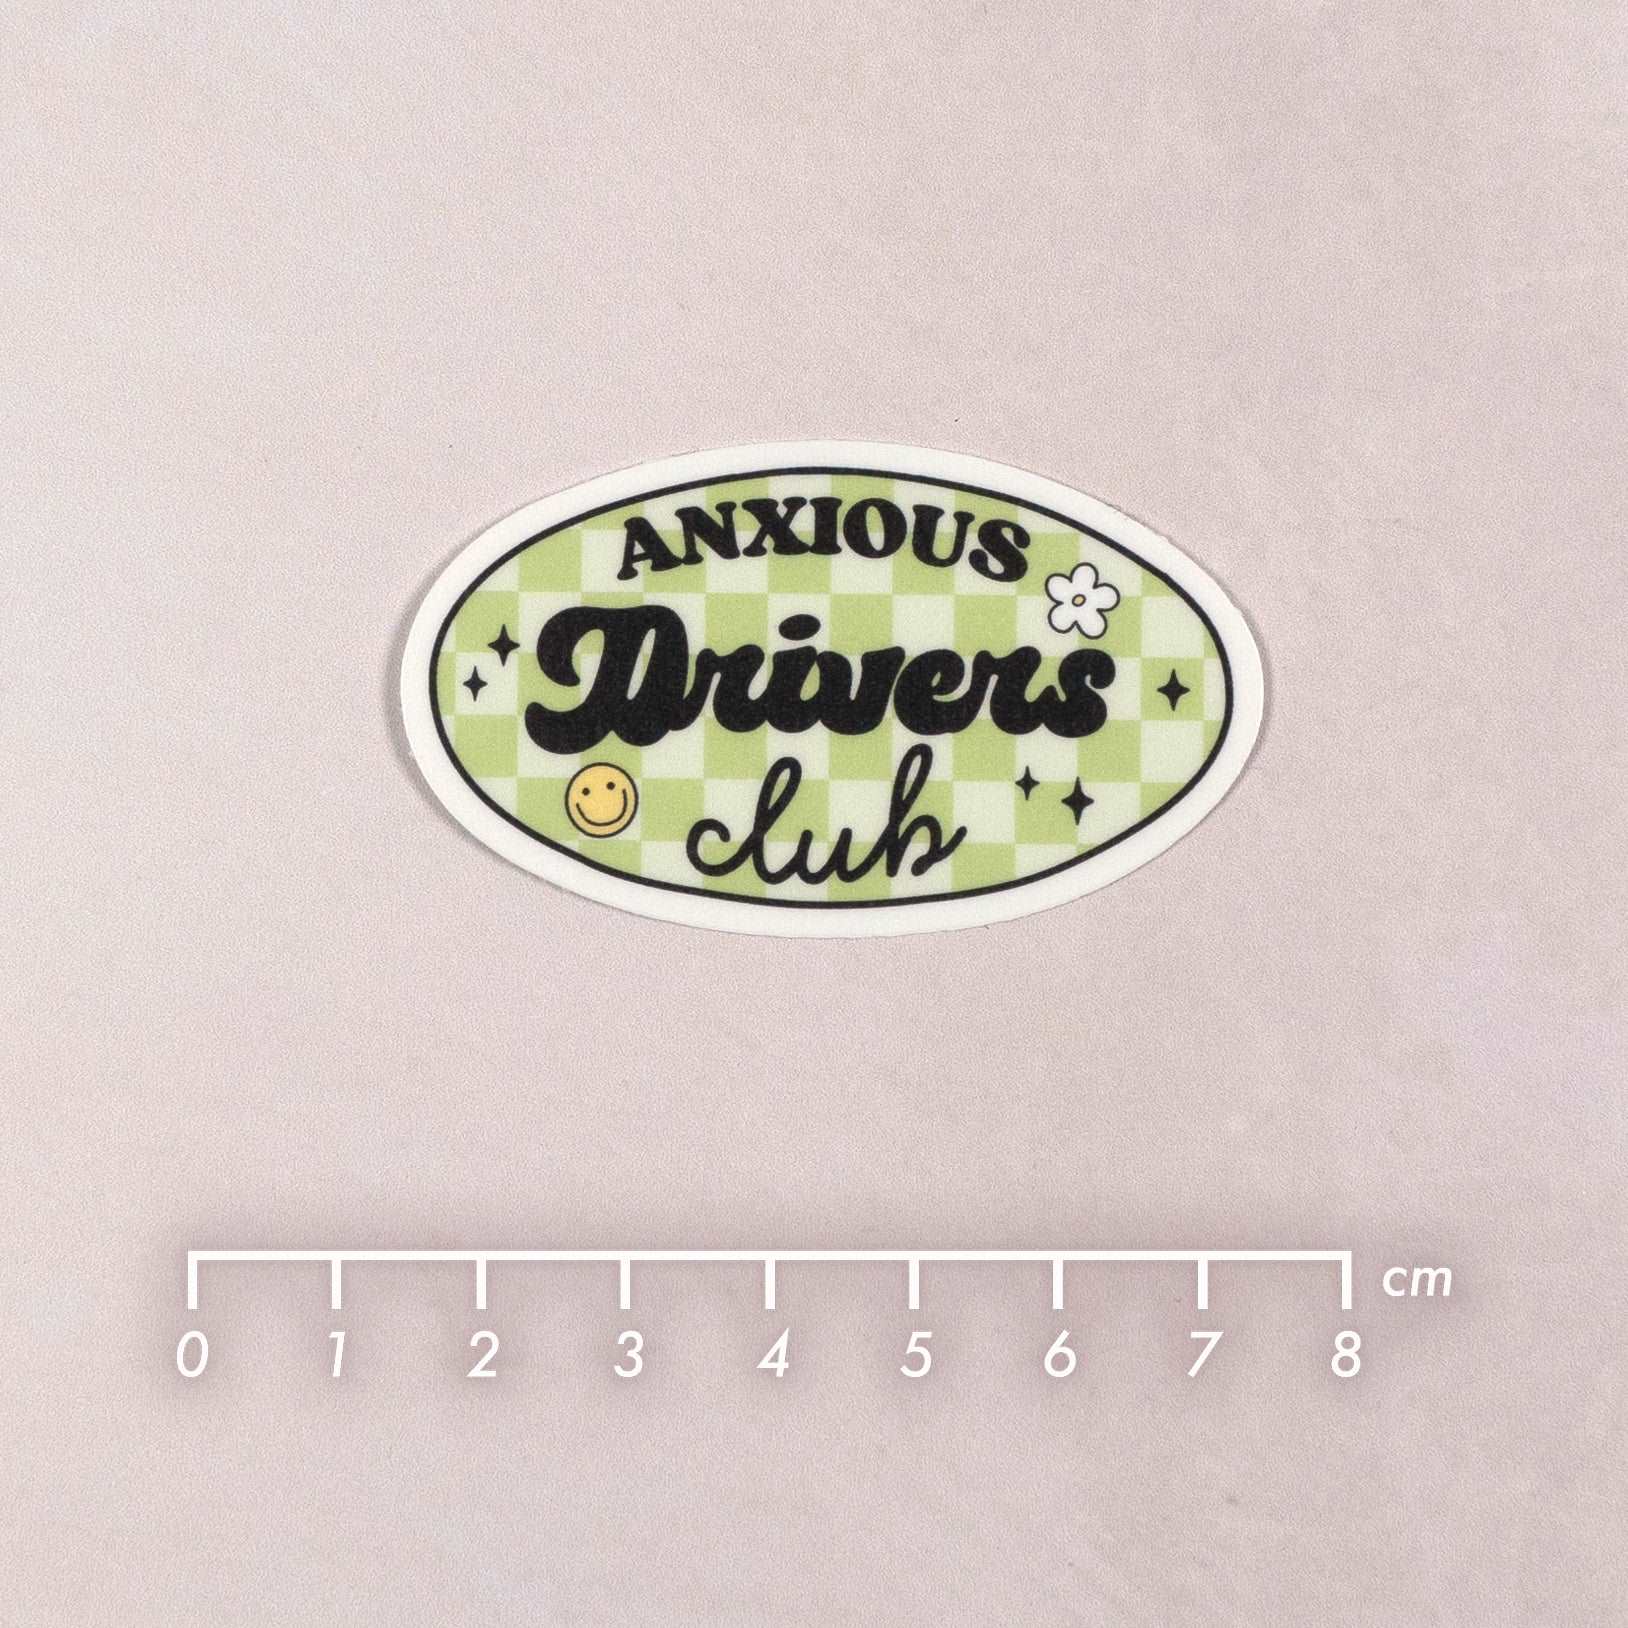 Anxious Drivers Club Die Cut Vinyl Sticker by Plannerface